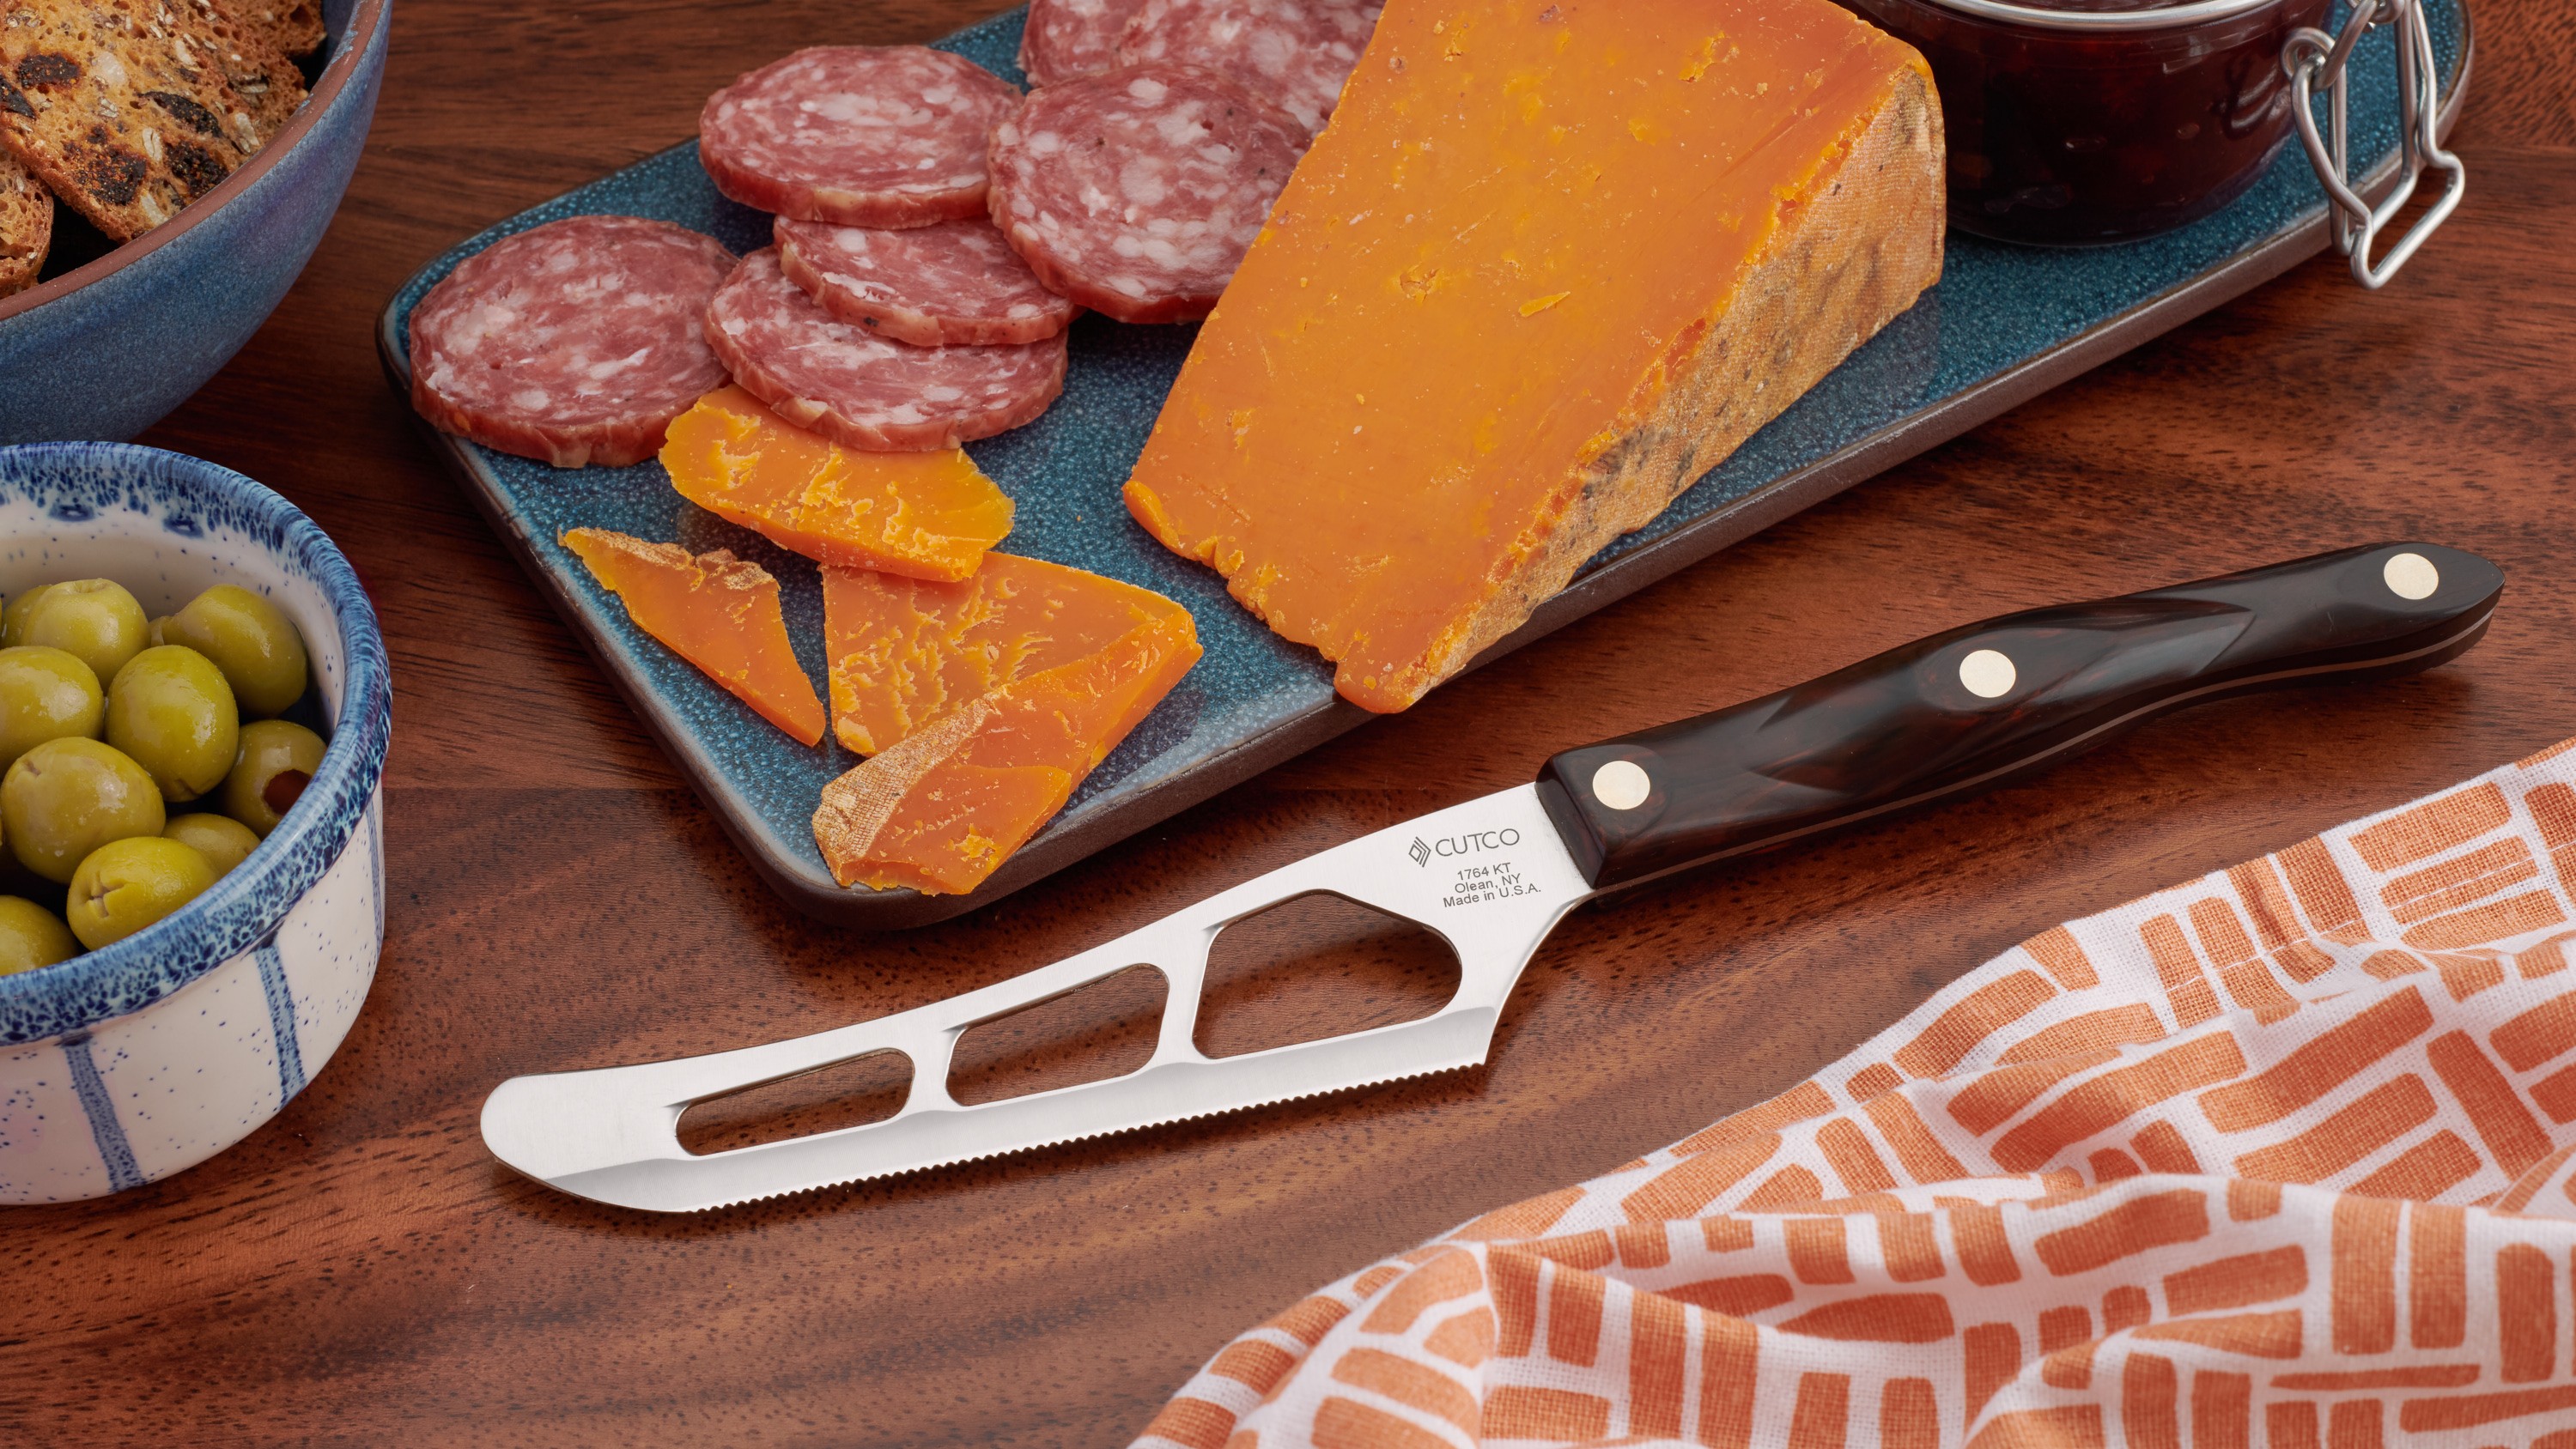  Cutco Cutlery Pizza Cutter w/Removable Blade: Home & Kitchen